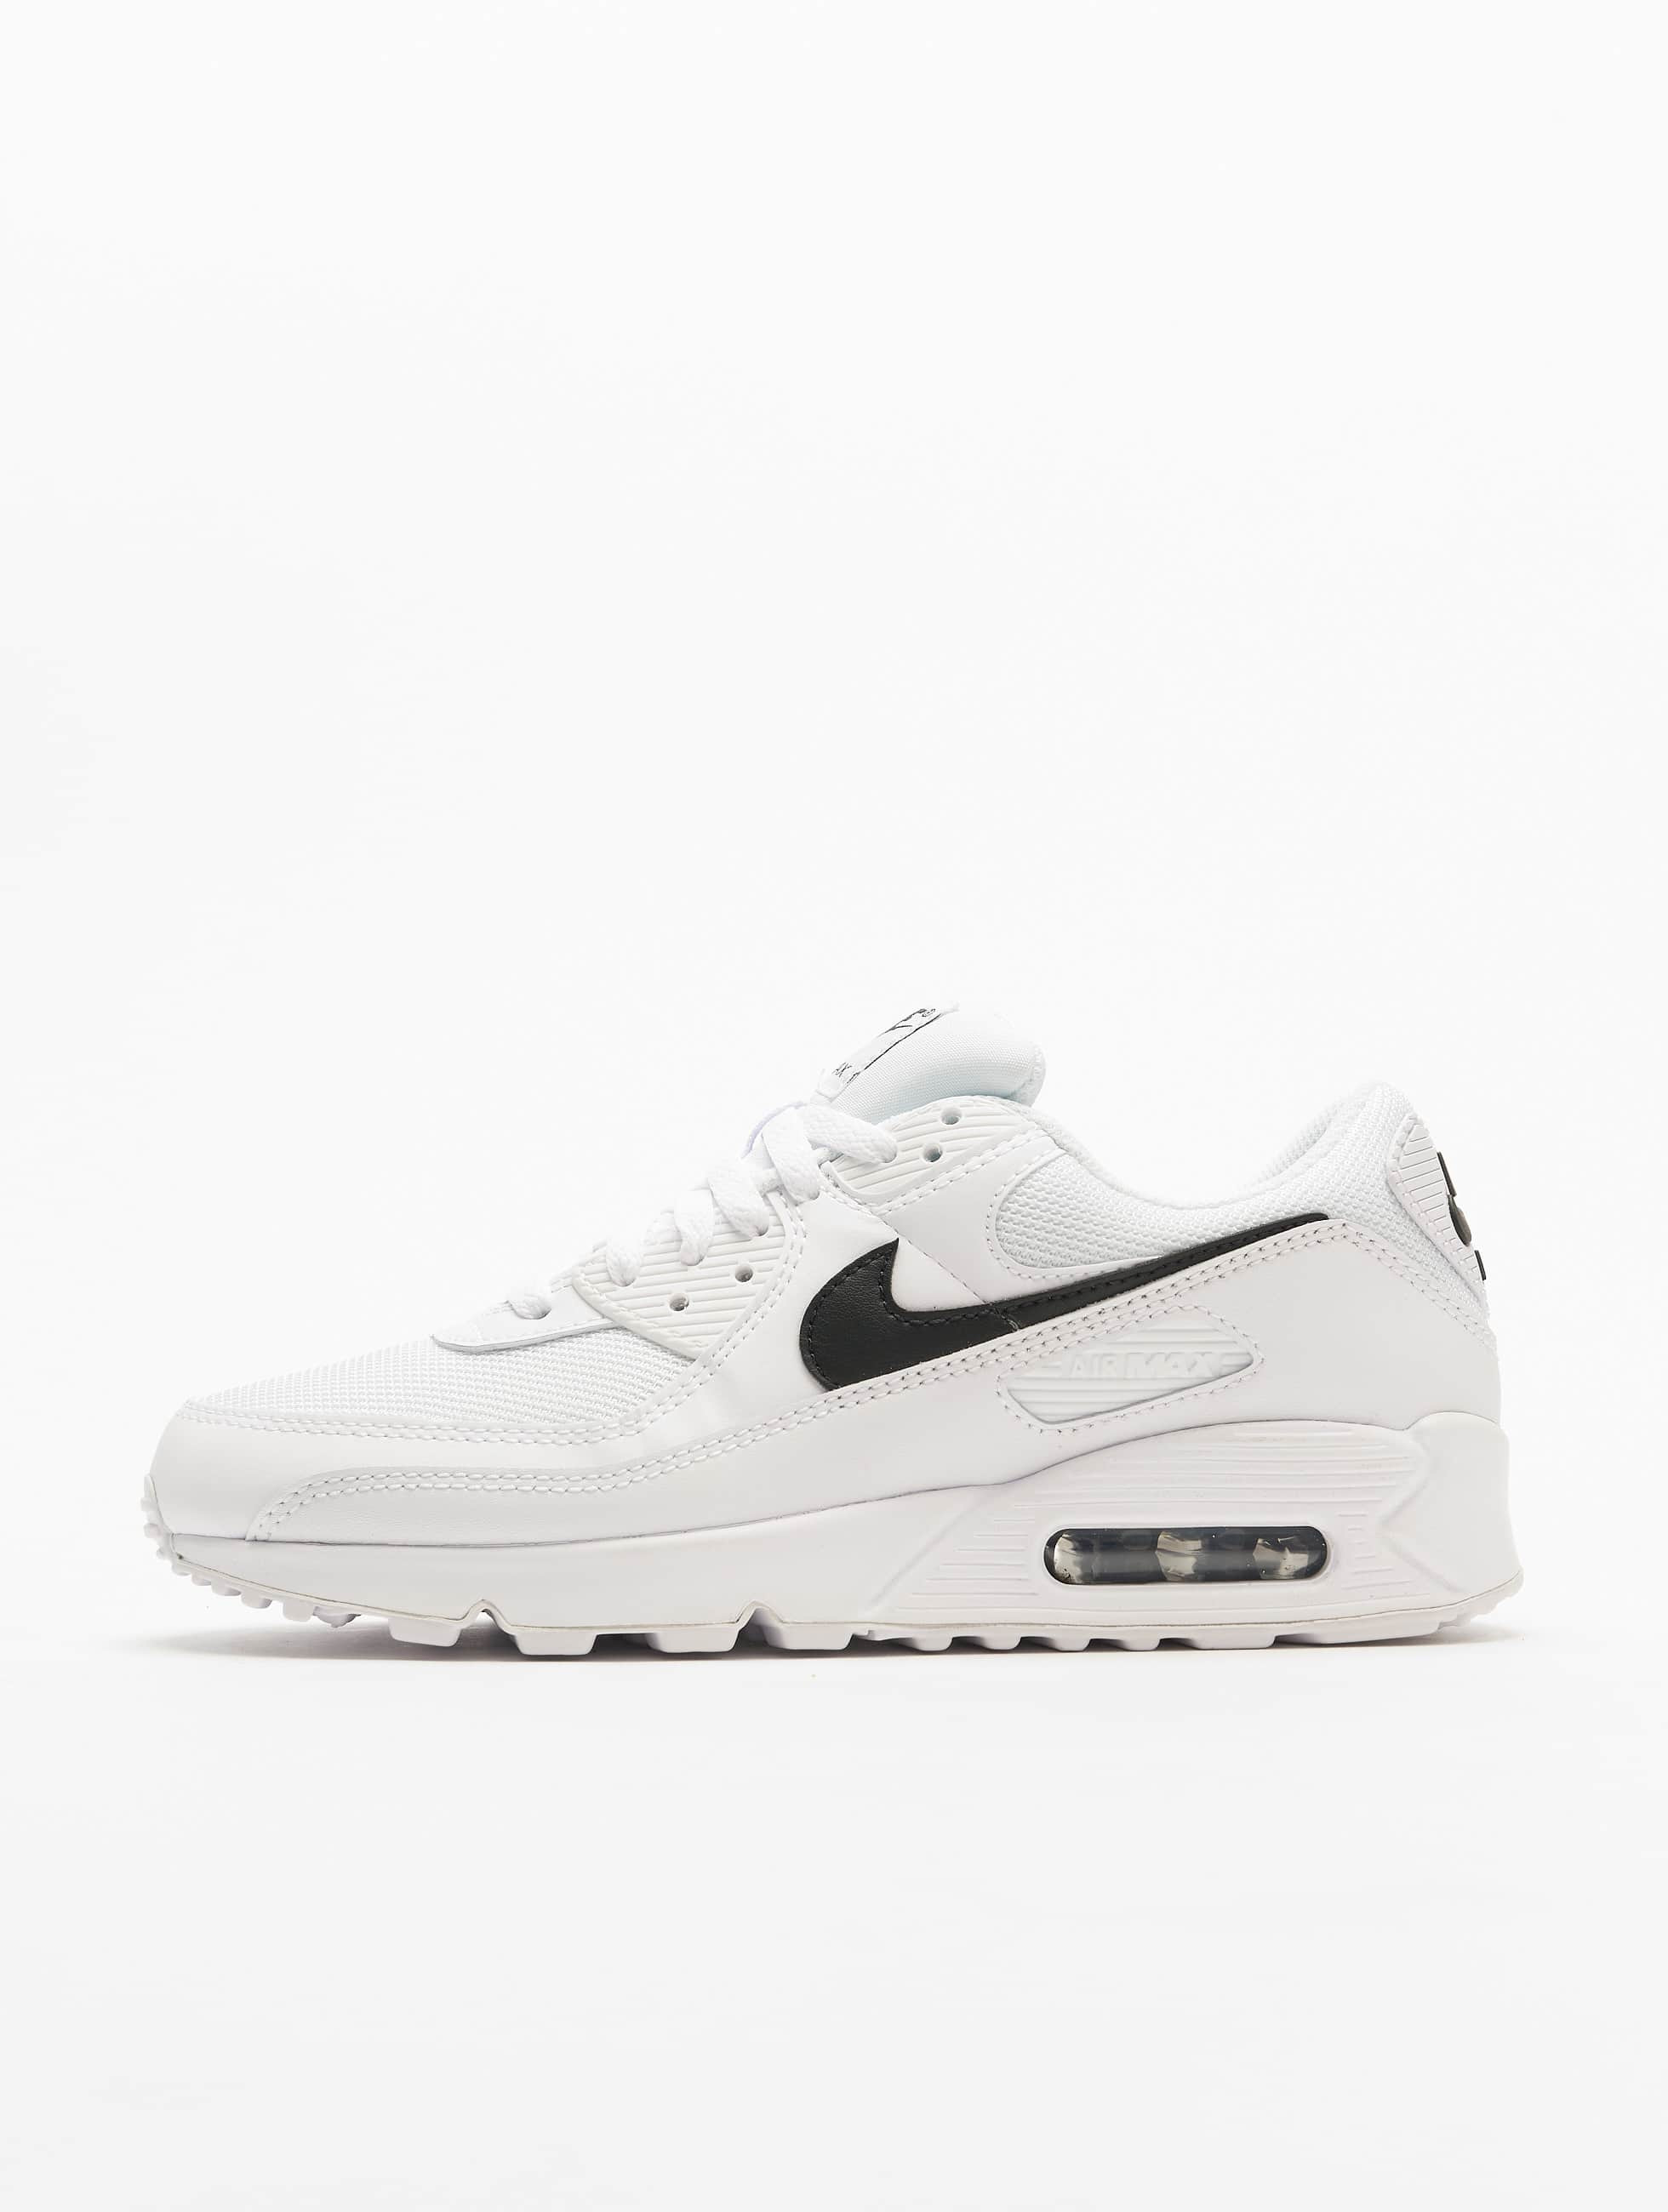 Nike Air Max 90 Sneakers White/Black/White